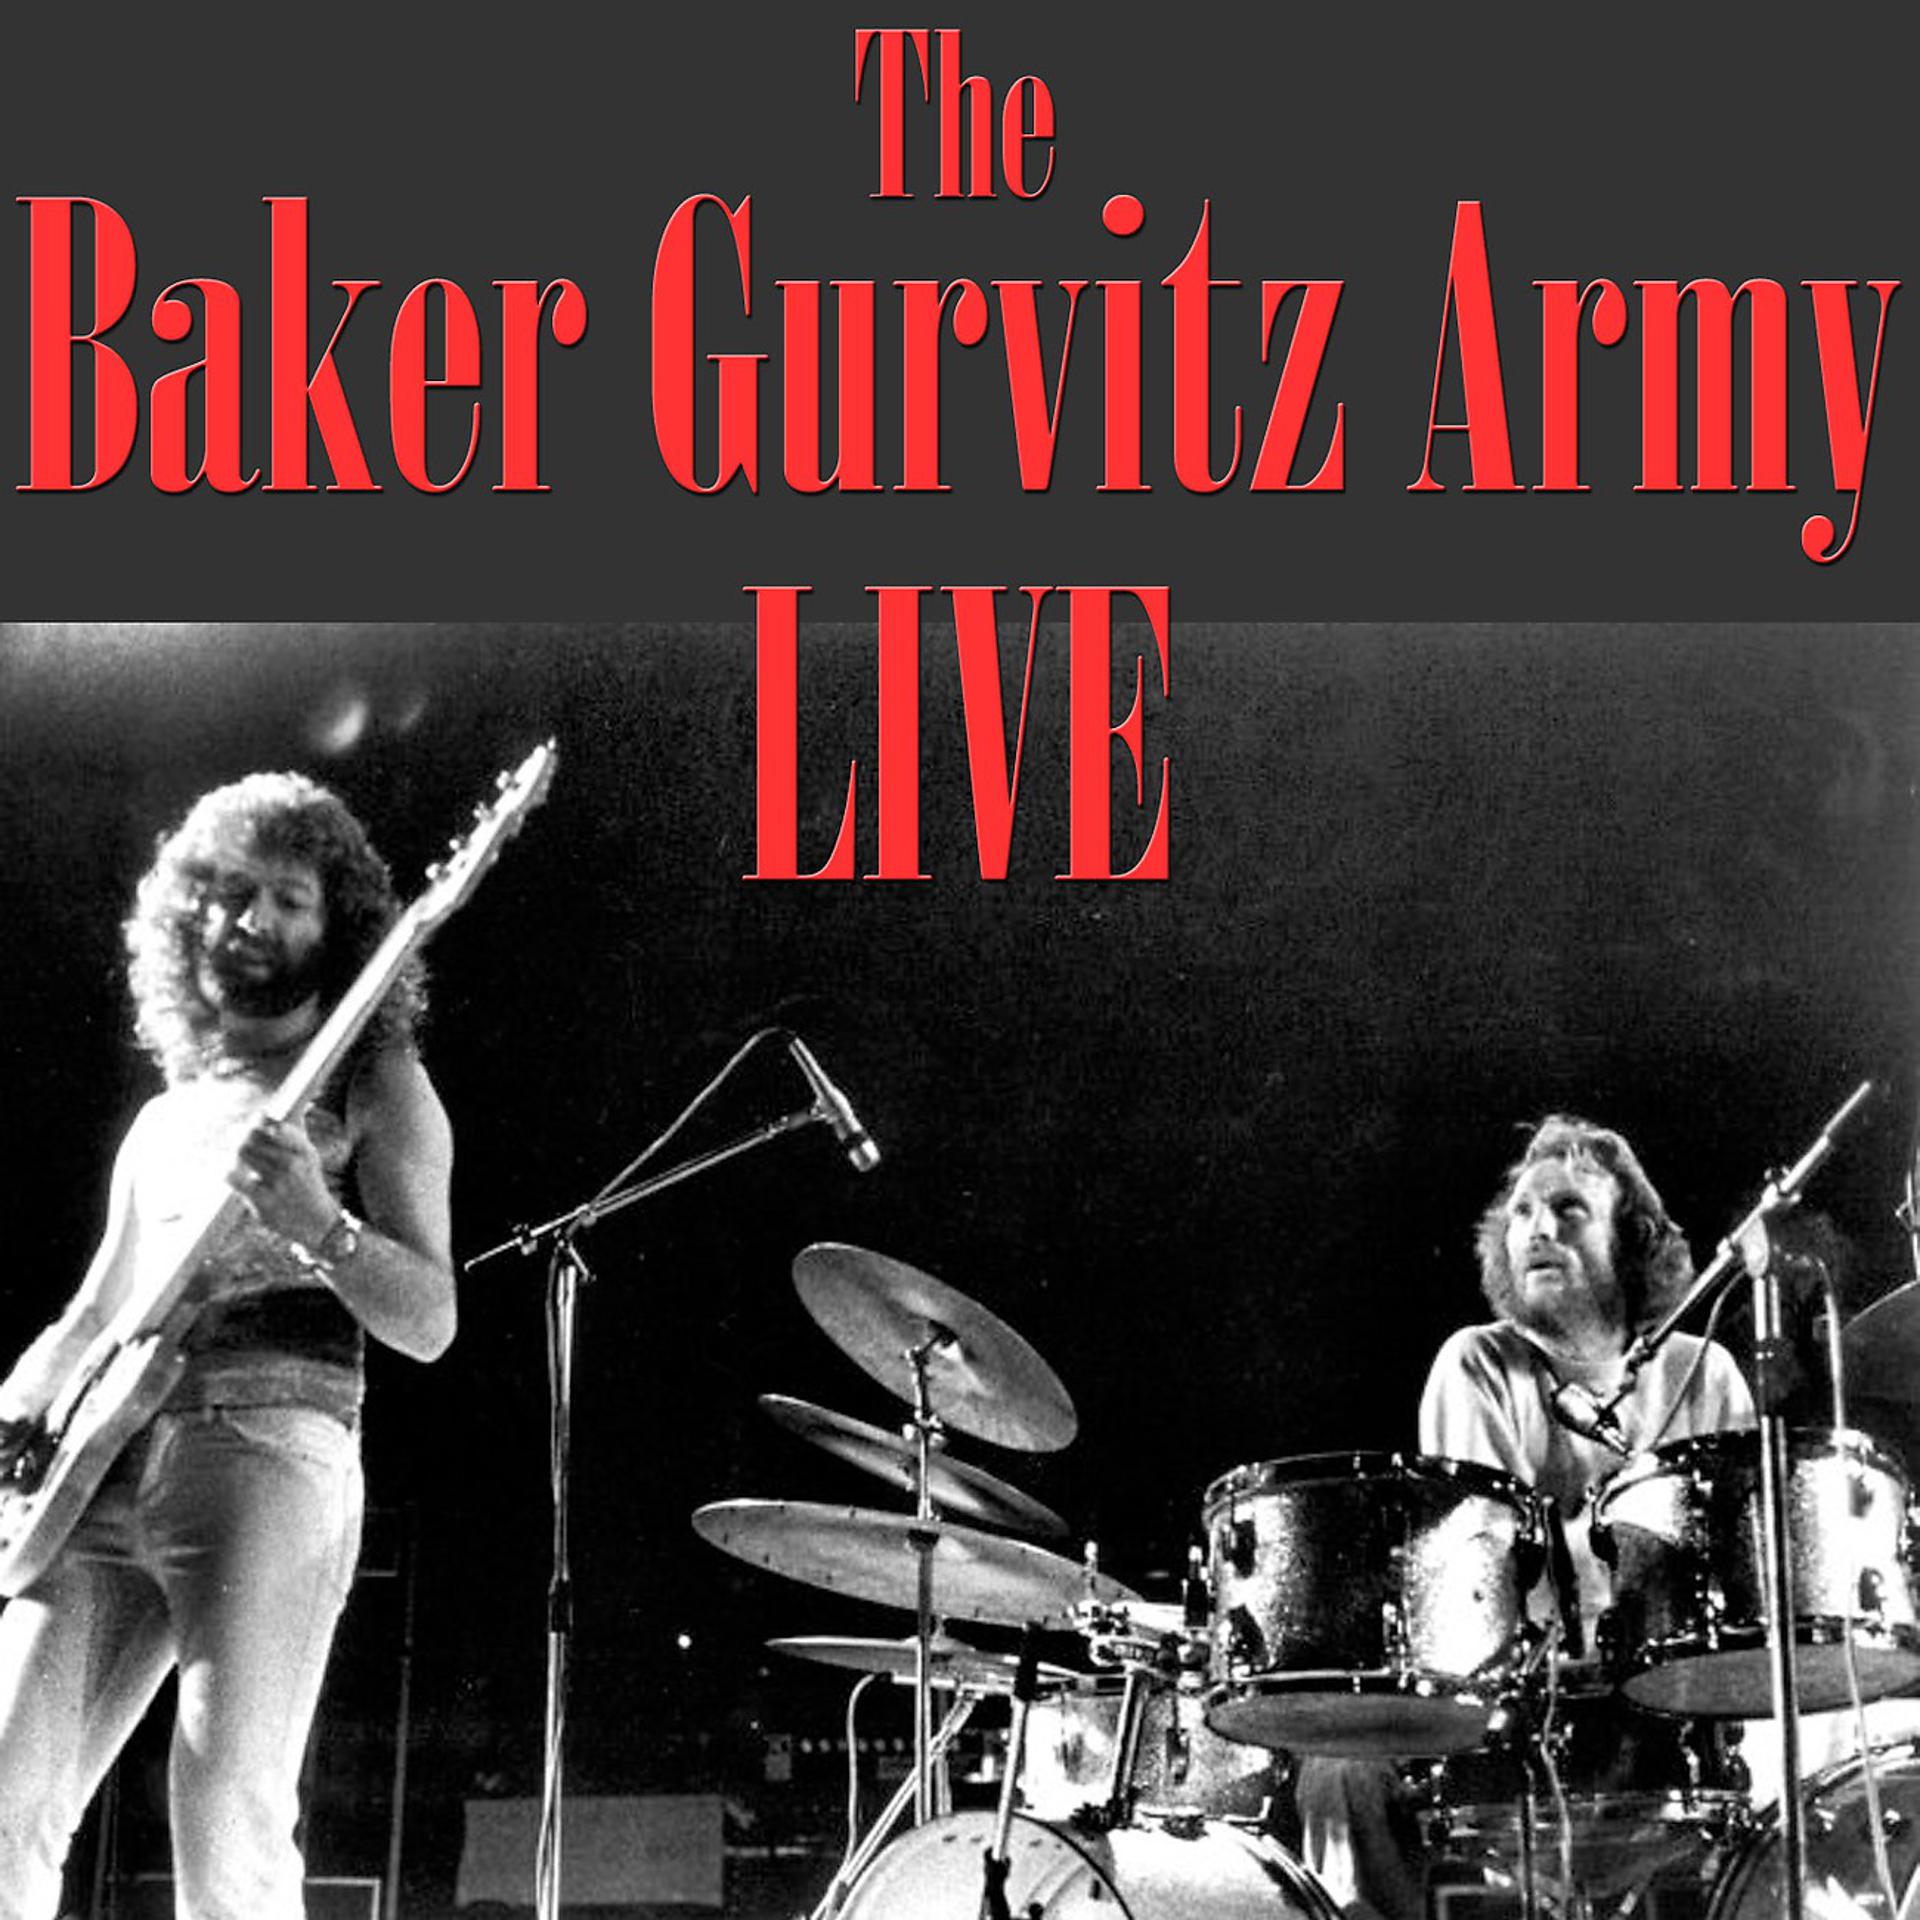 Press gurvitz. Baker Gurvitz Army. Baker Gurvitz Army Band. The Baker Gurvitz Army Baker Gurvitz Army. Baker Gurvitz Army Elysian encounter 1975.